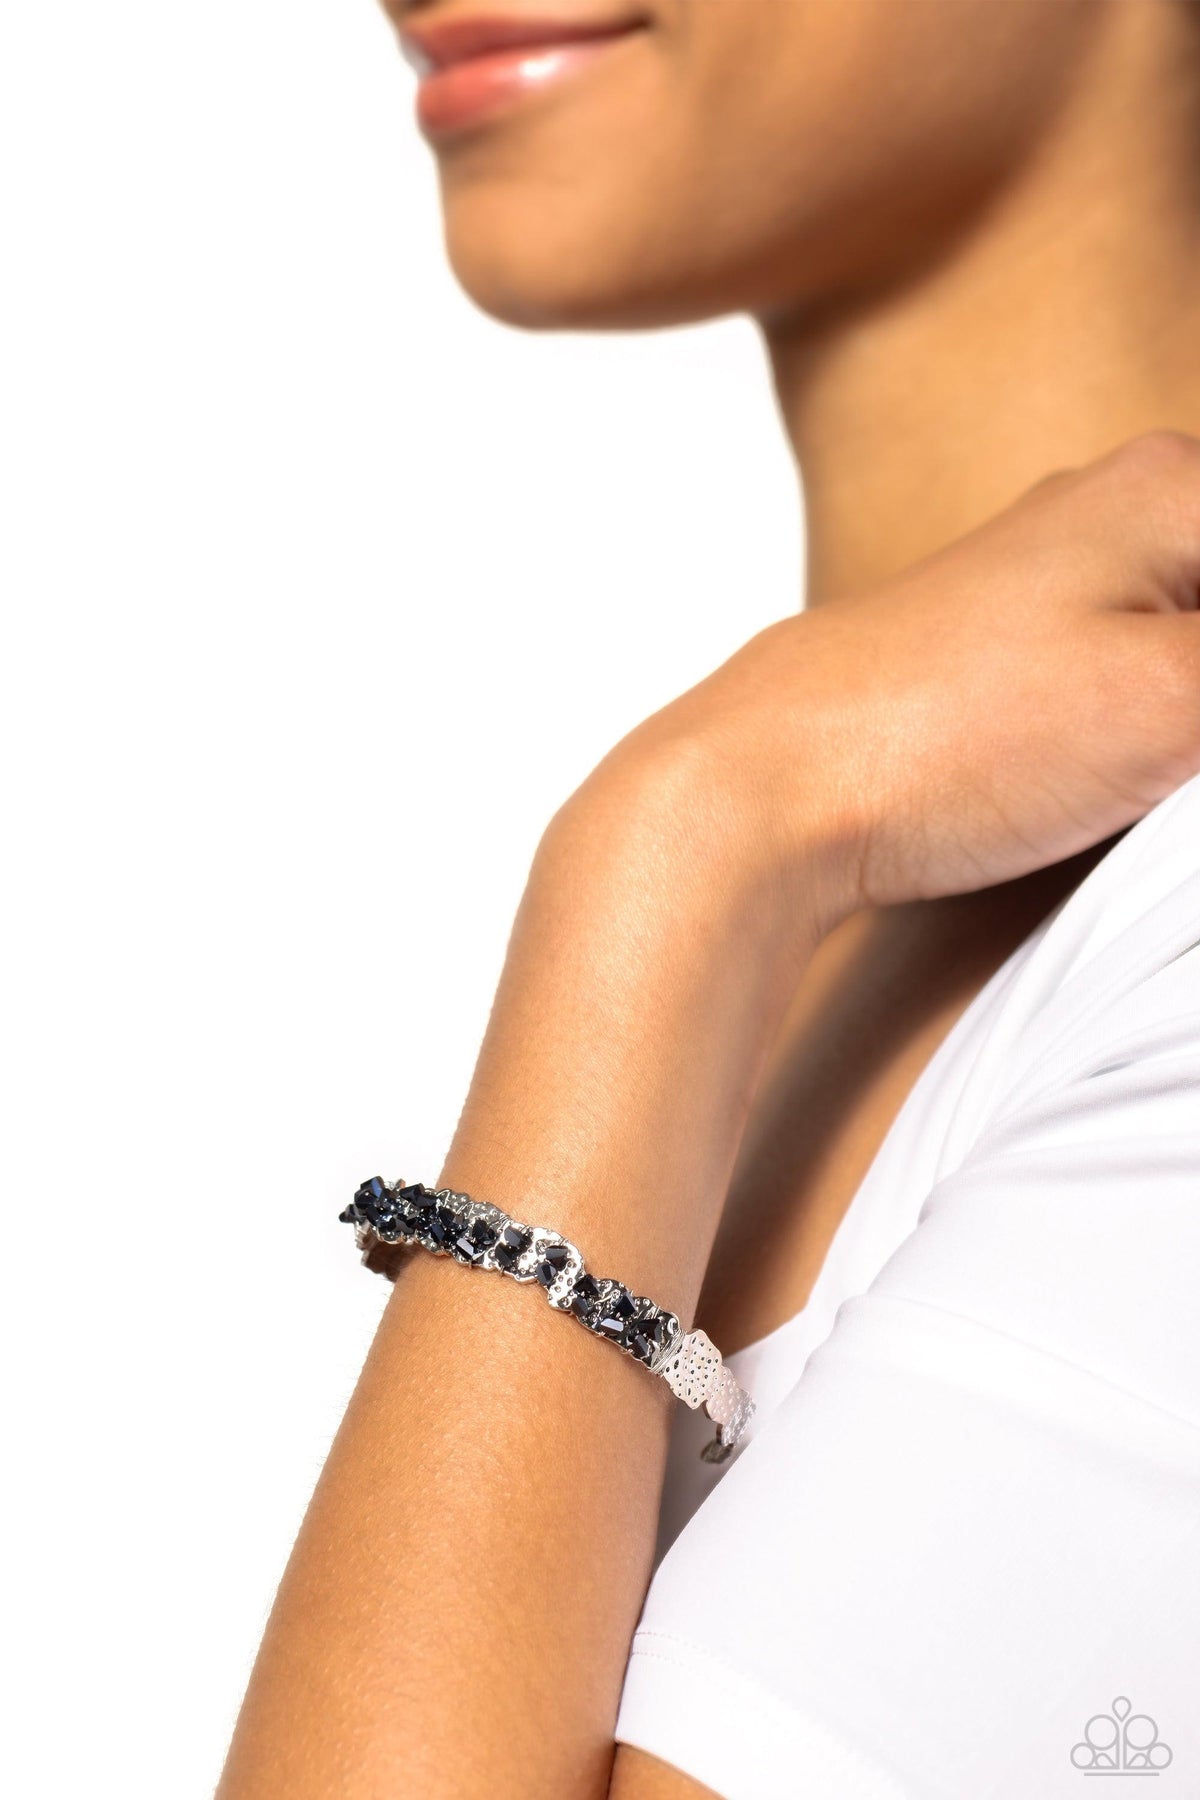 Enticingly Icy Blue Rhinestone Cuff Bracelet - Paparazzi Accessories-on model - CarasShop.com - $5 Jewelry by Cara Jewels